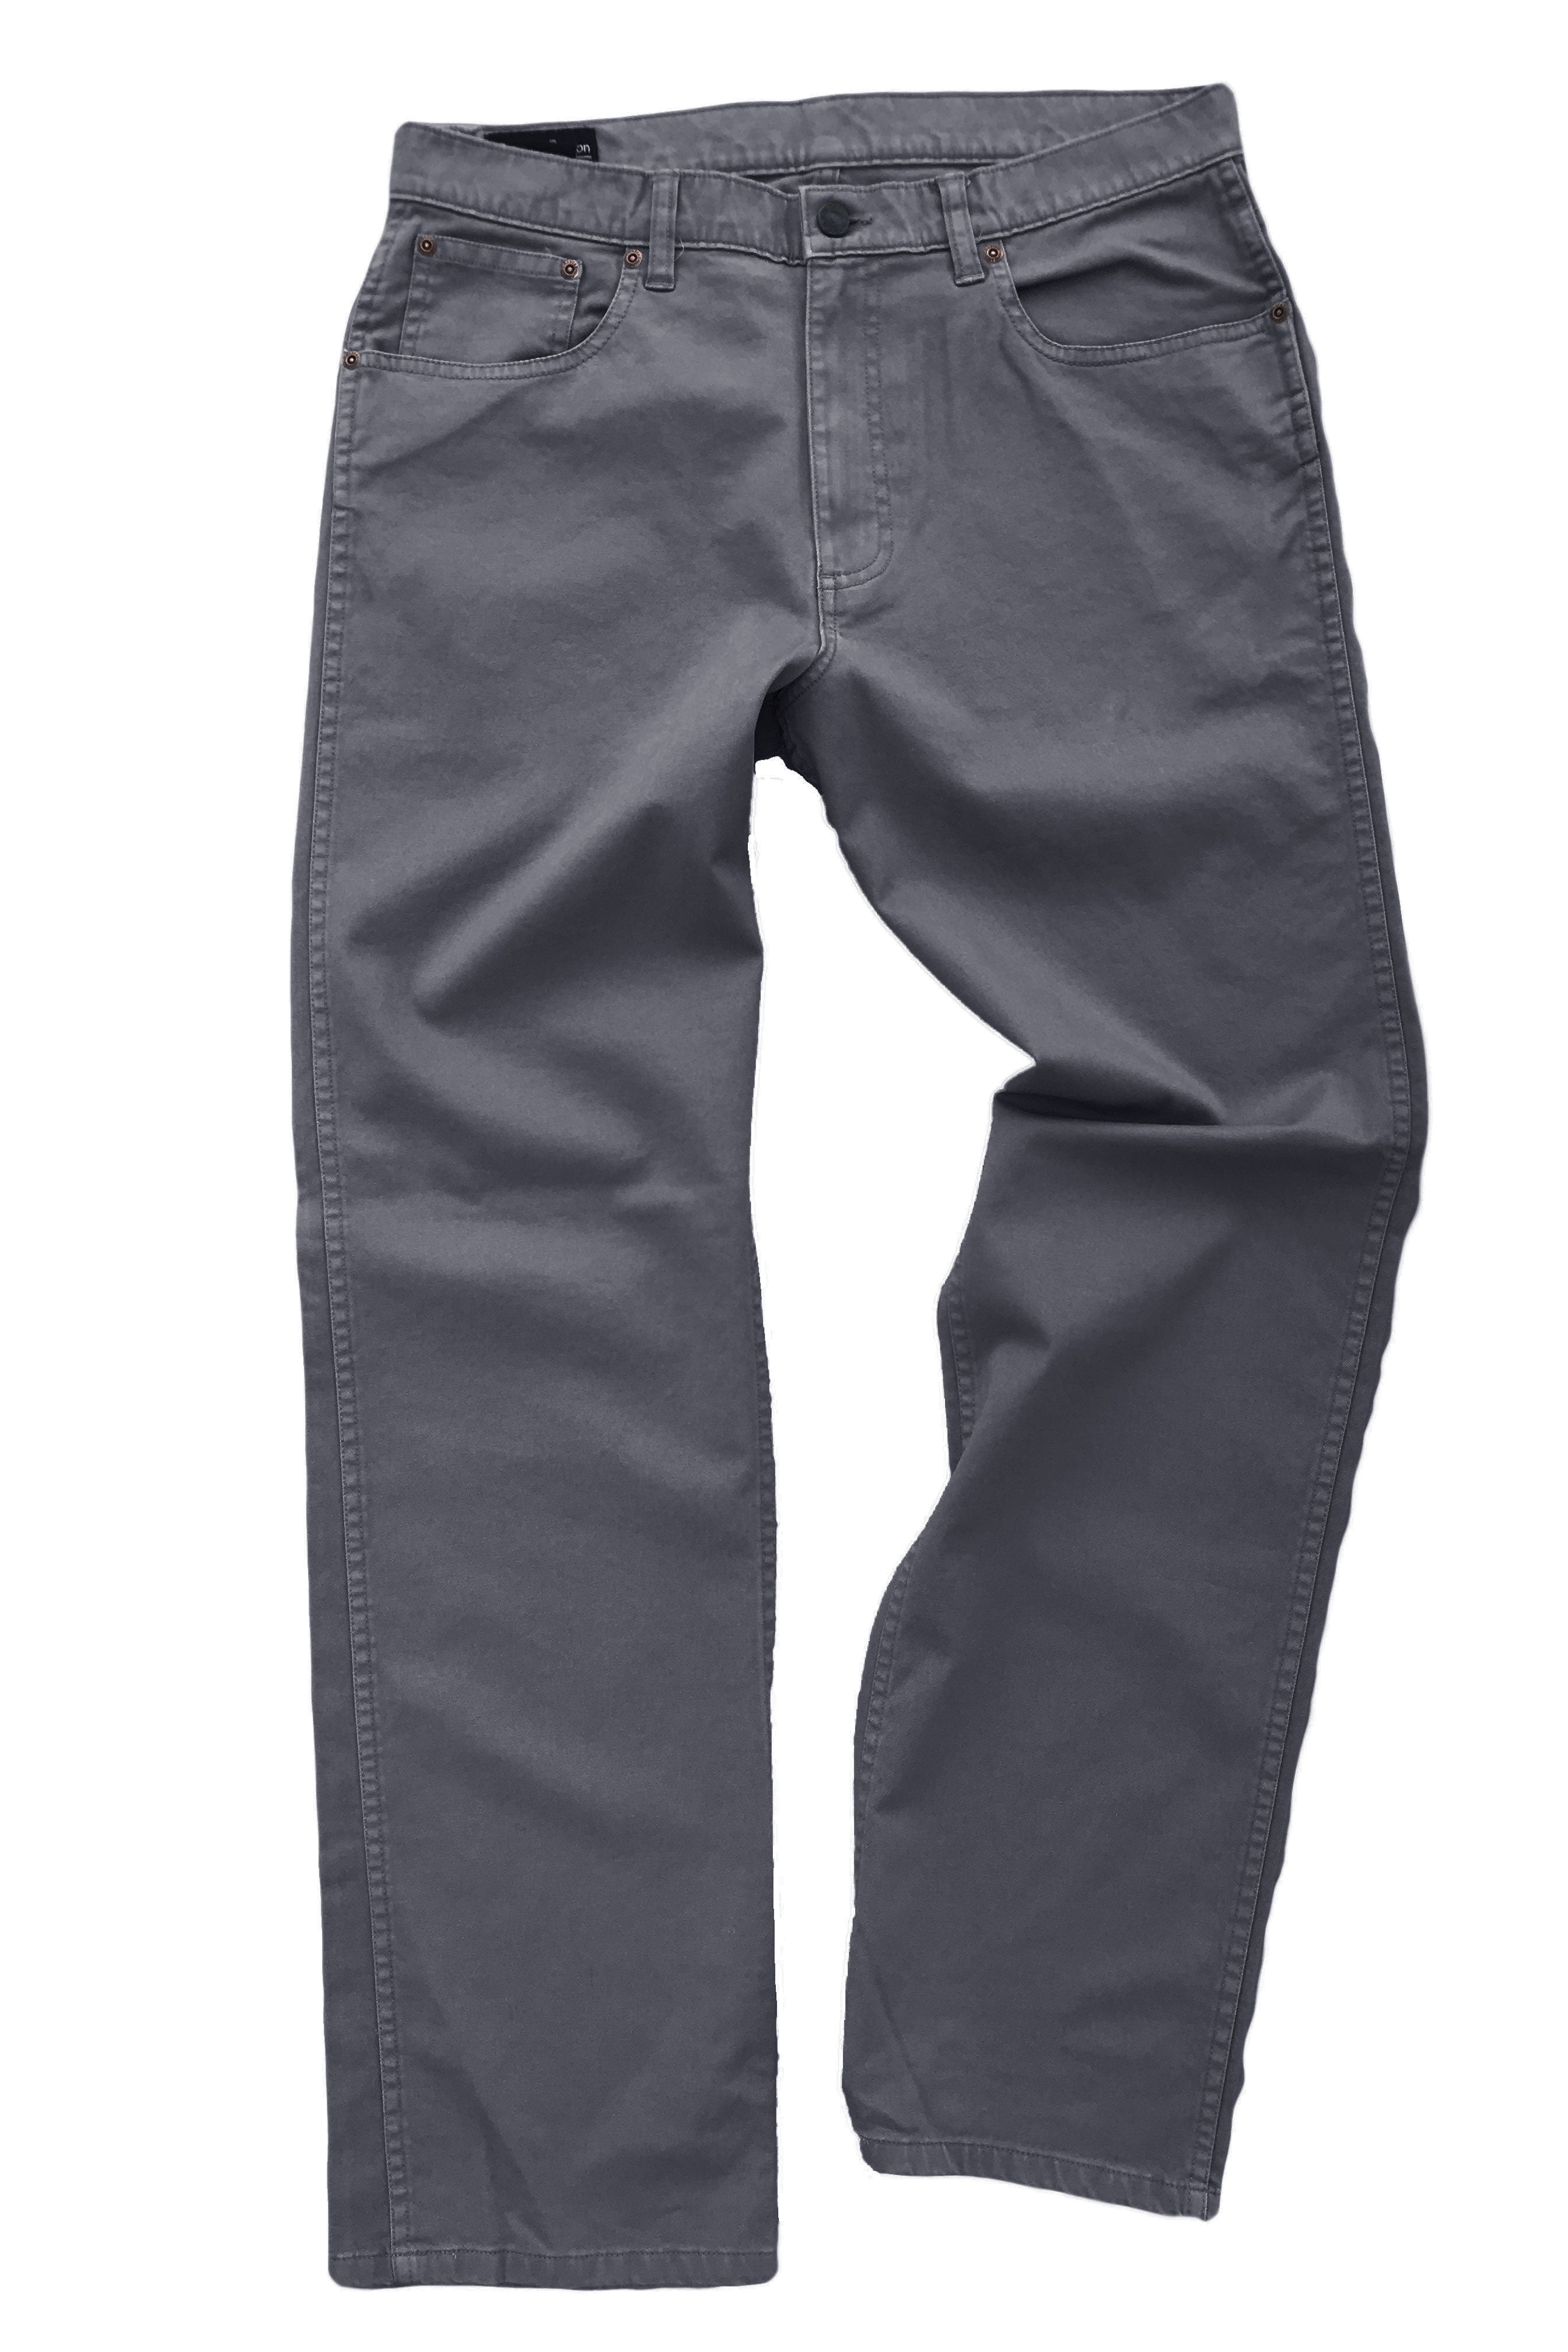 Men's 5-Pocket Slim Fit Twill Pants - Rattan – Civilianaire